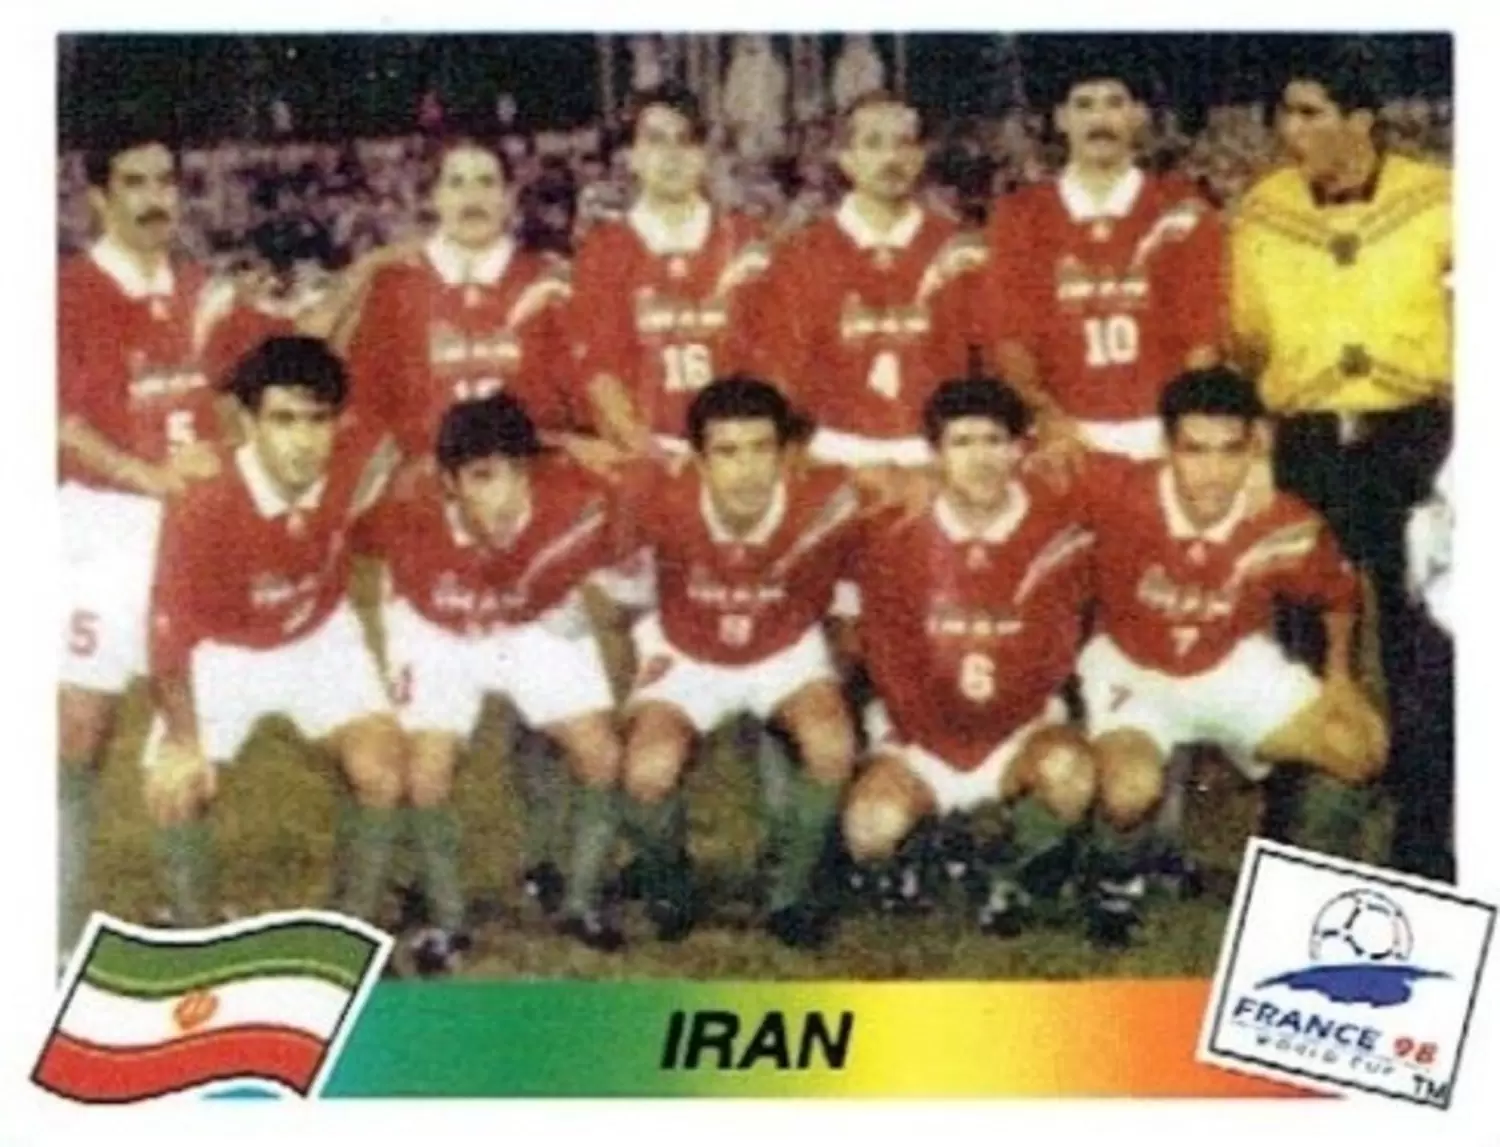 France 98 - Team Iran - IRN